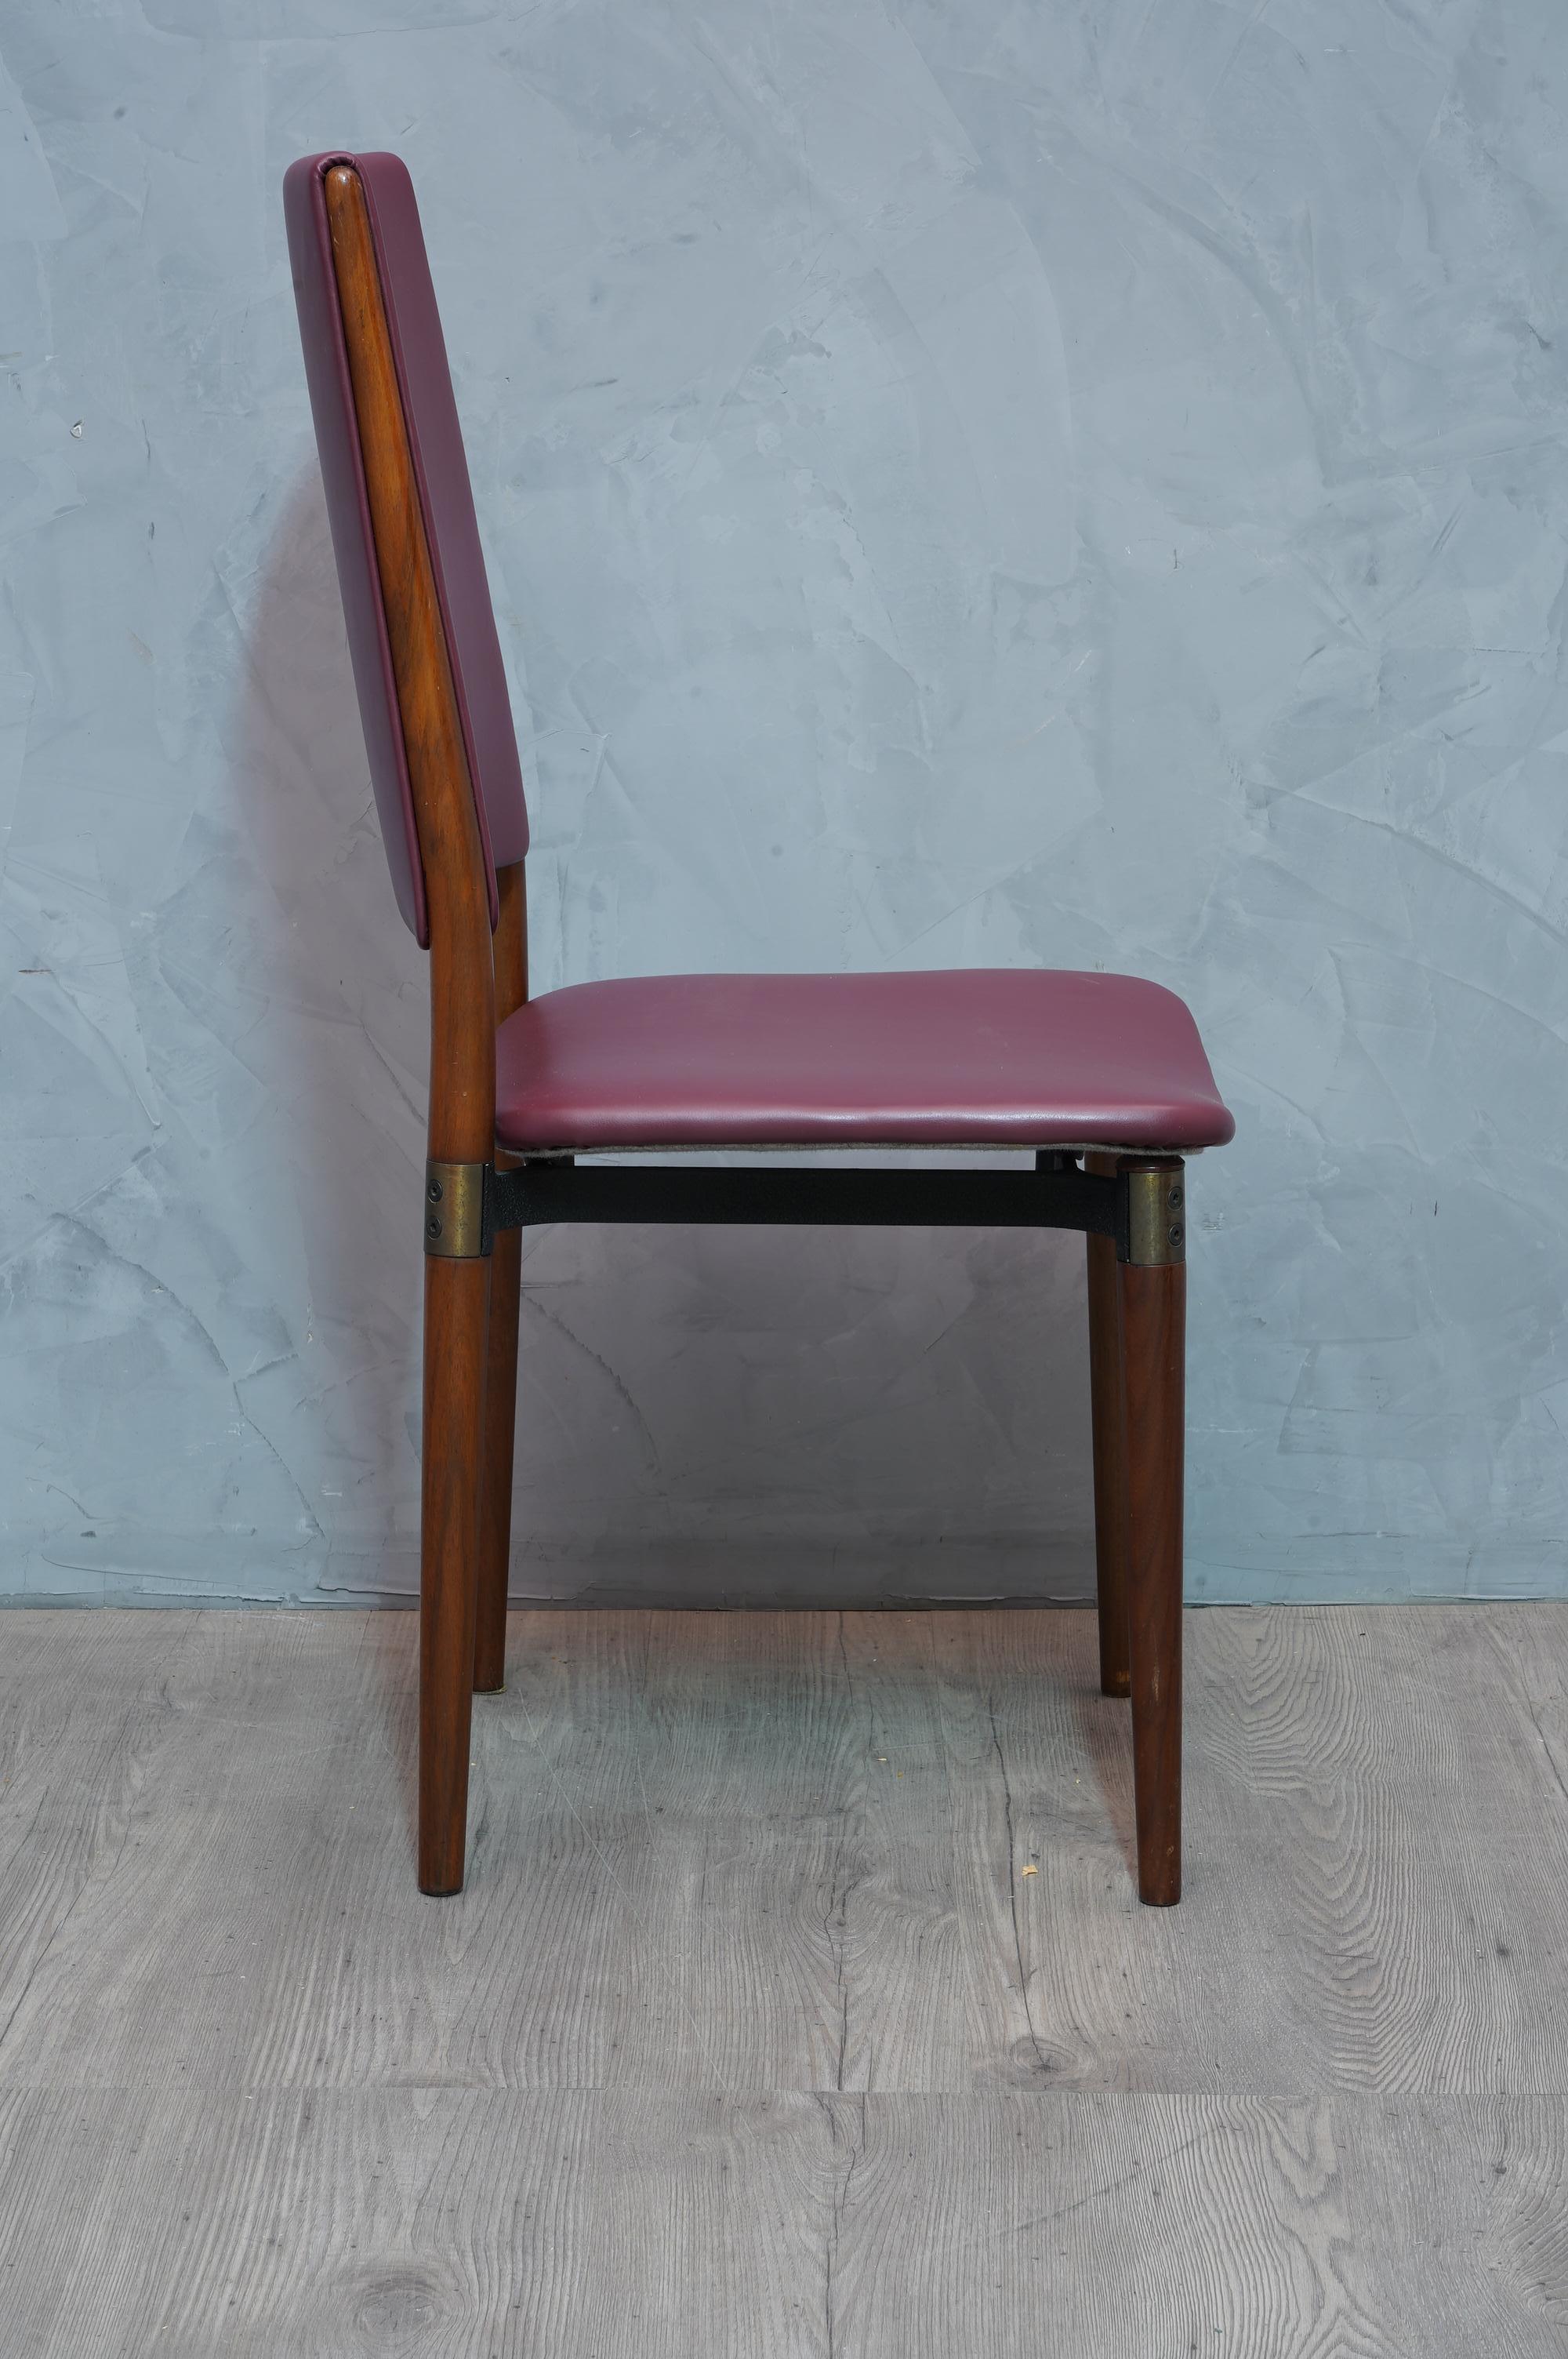 Italian Osvaldo Borsani for Tecno Wood and Leather Chairs, 1960 For Sale